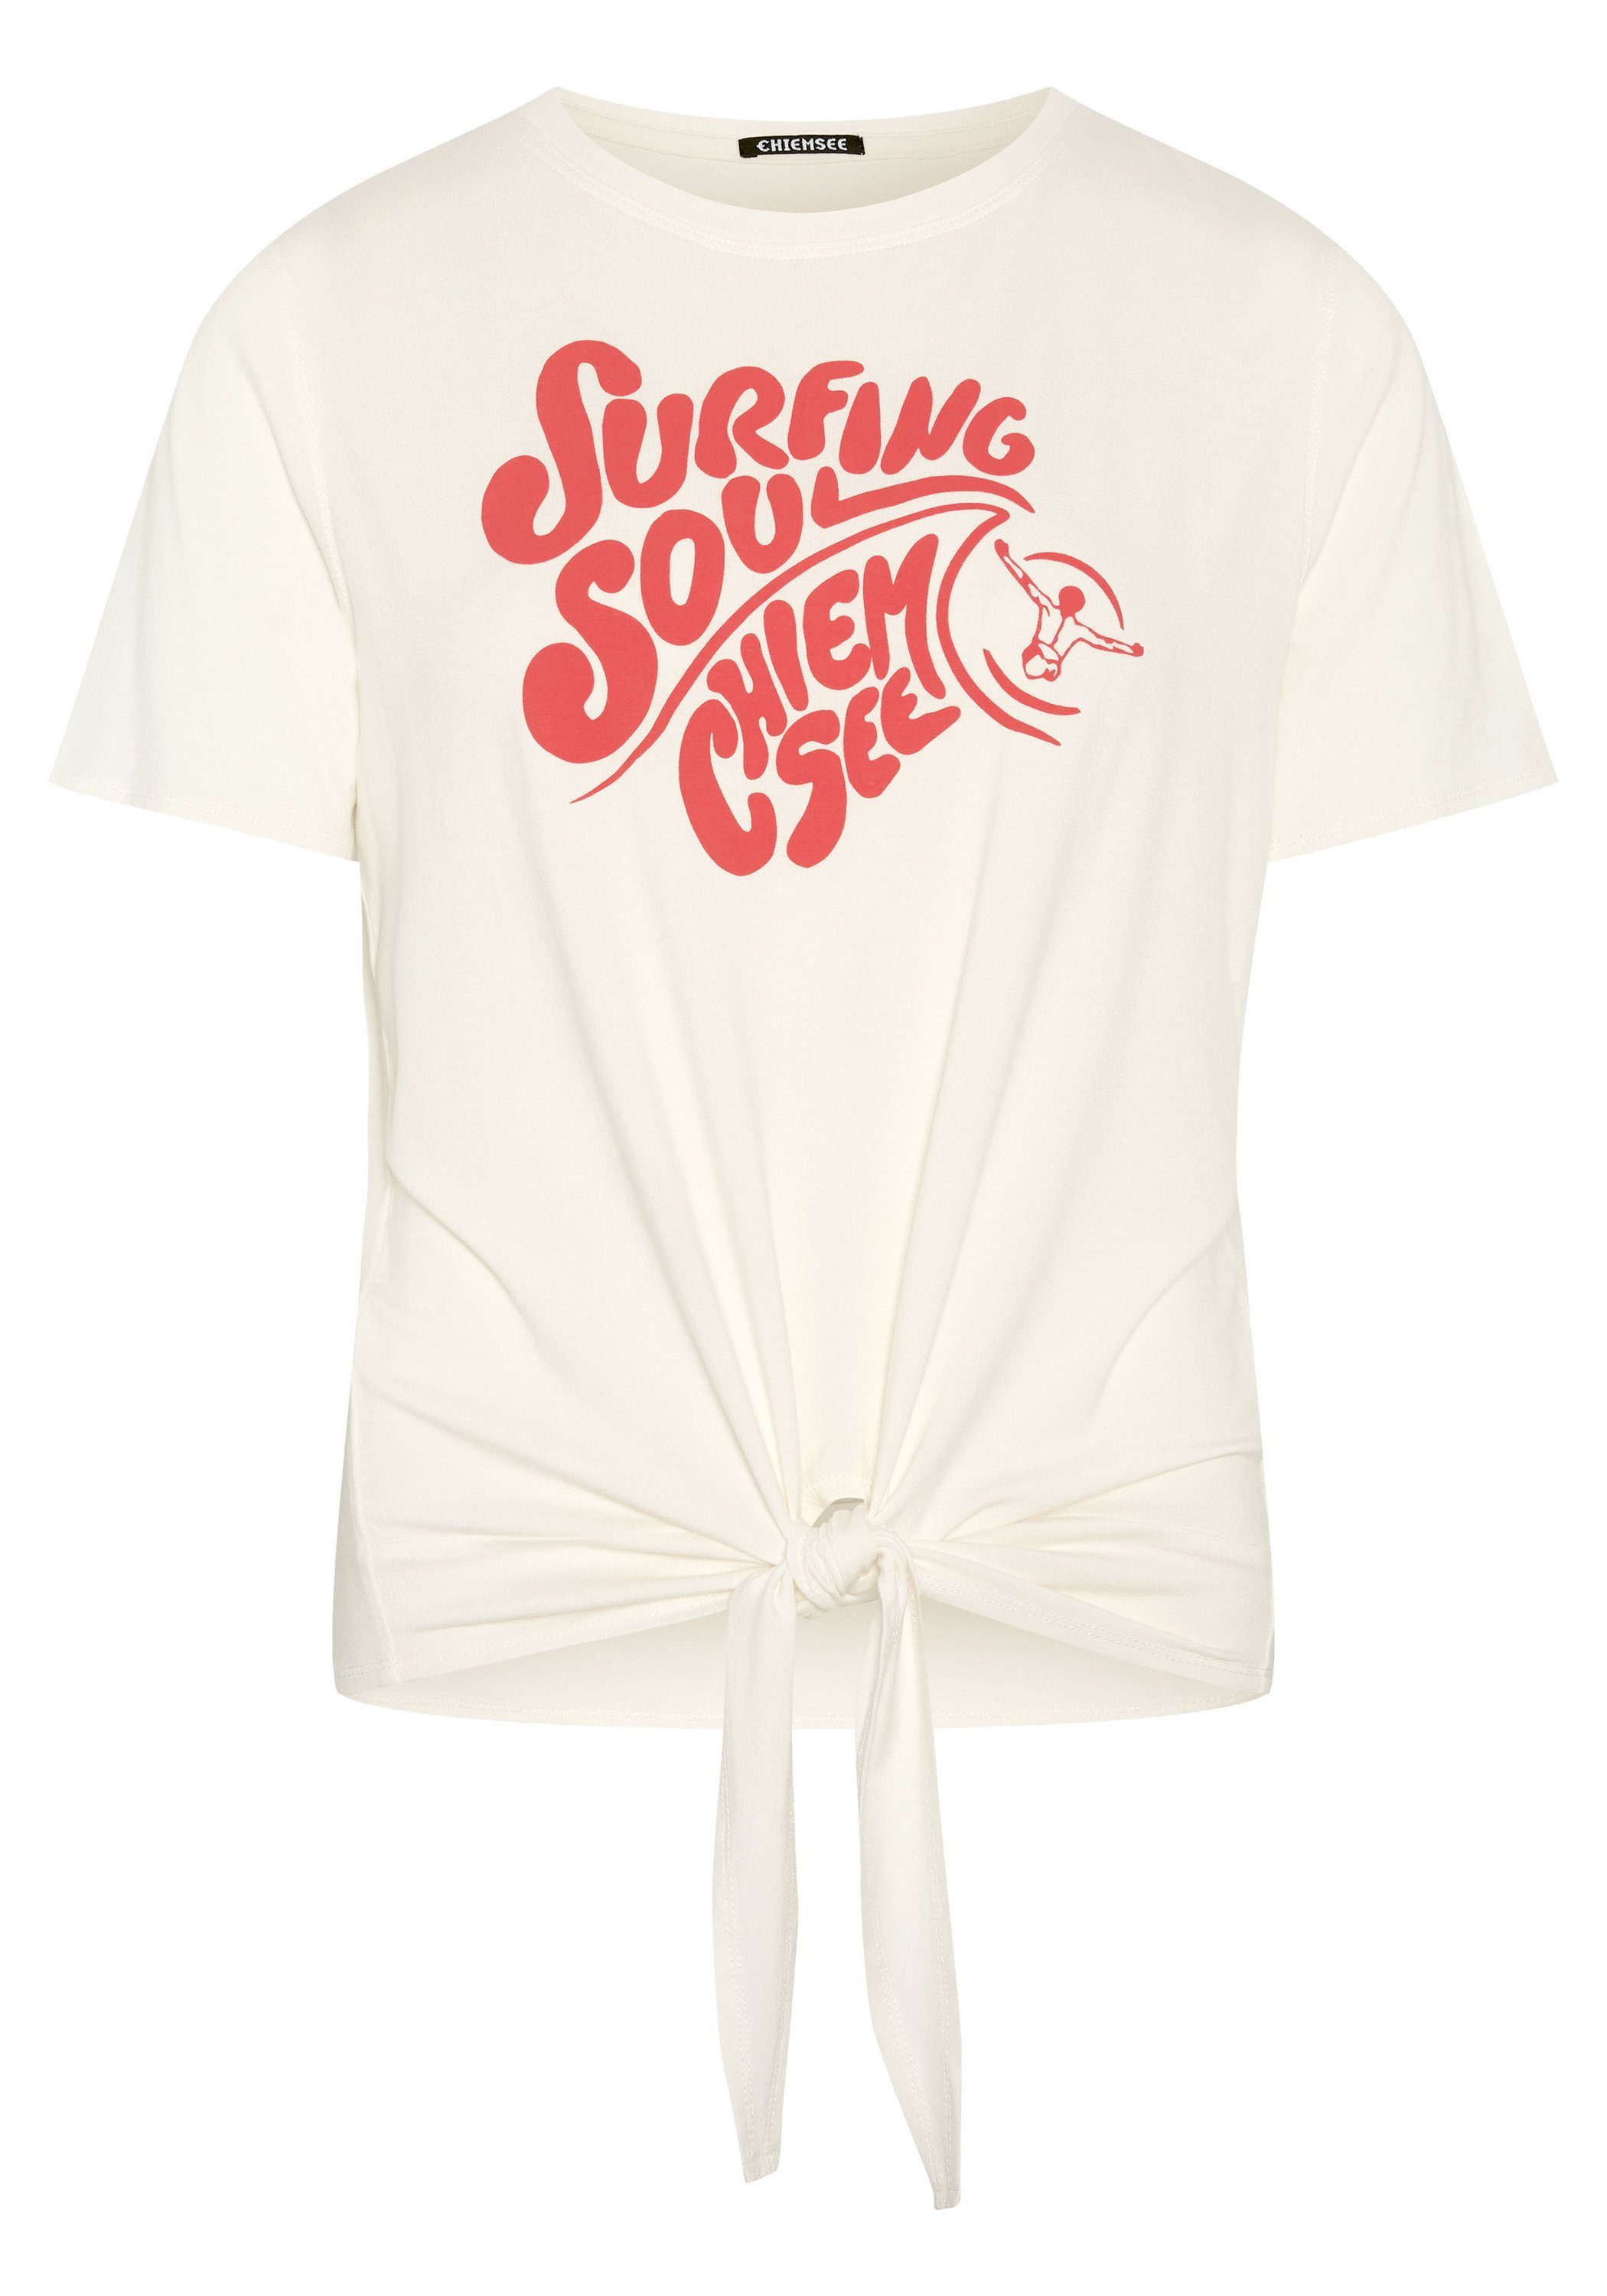 11-4202 Saum gecropptes Print-Shirt Knoten Star T-Shirt zum Chiemsee mit 1 White